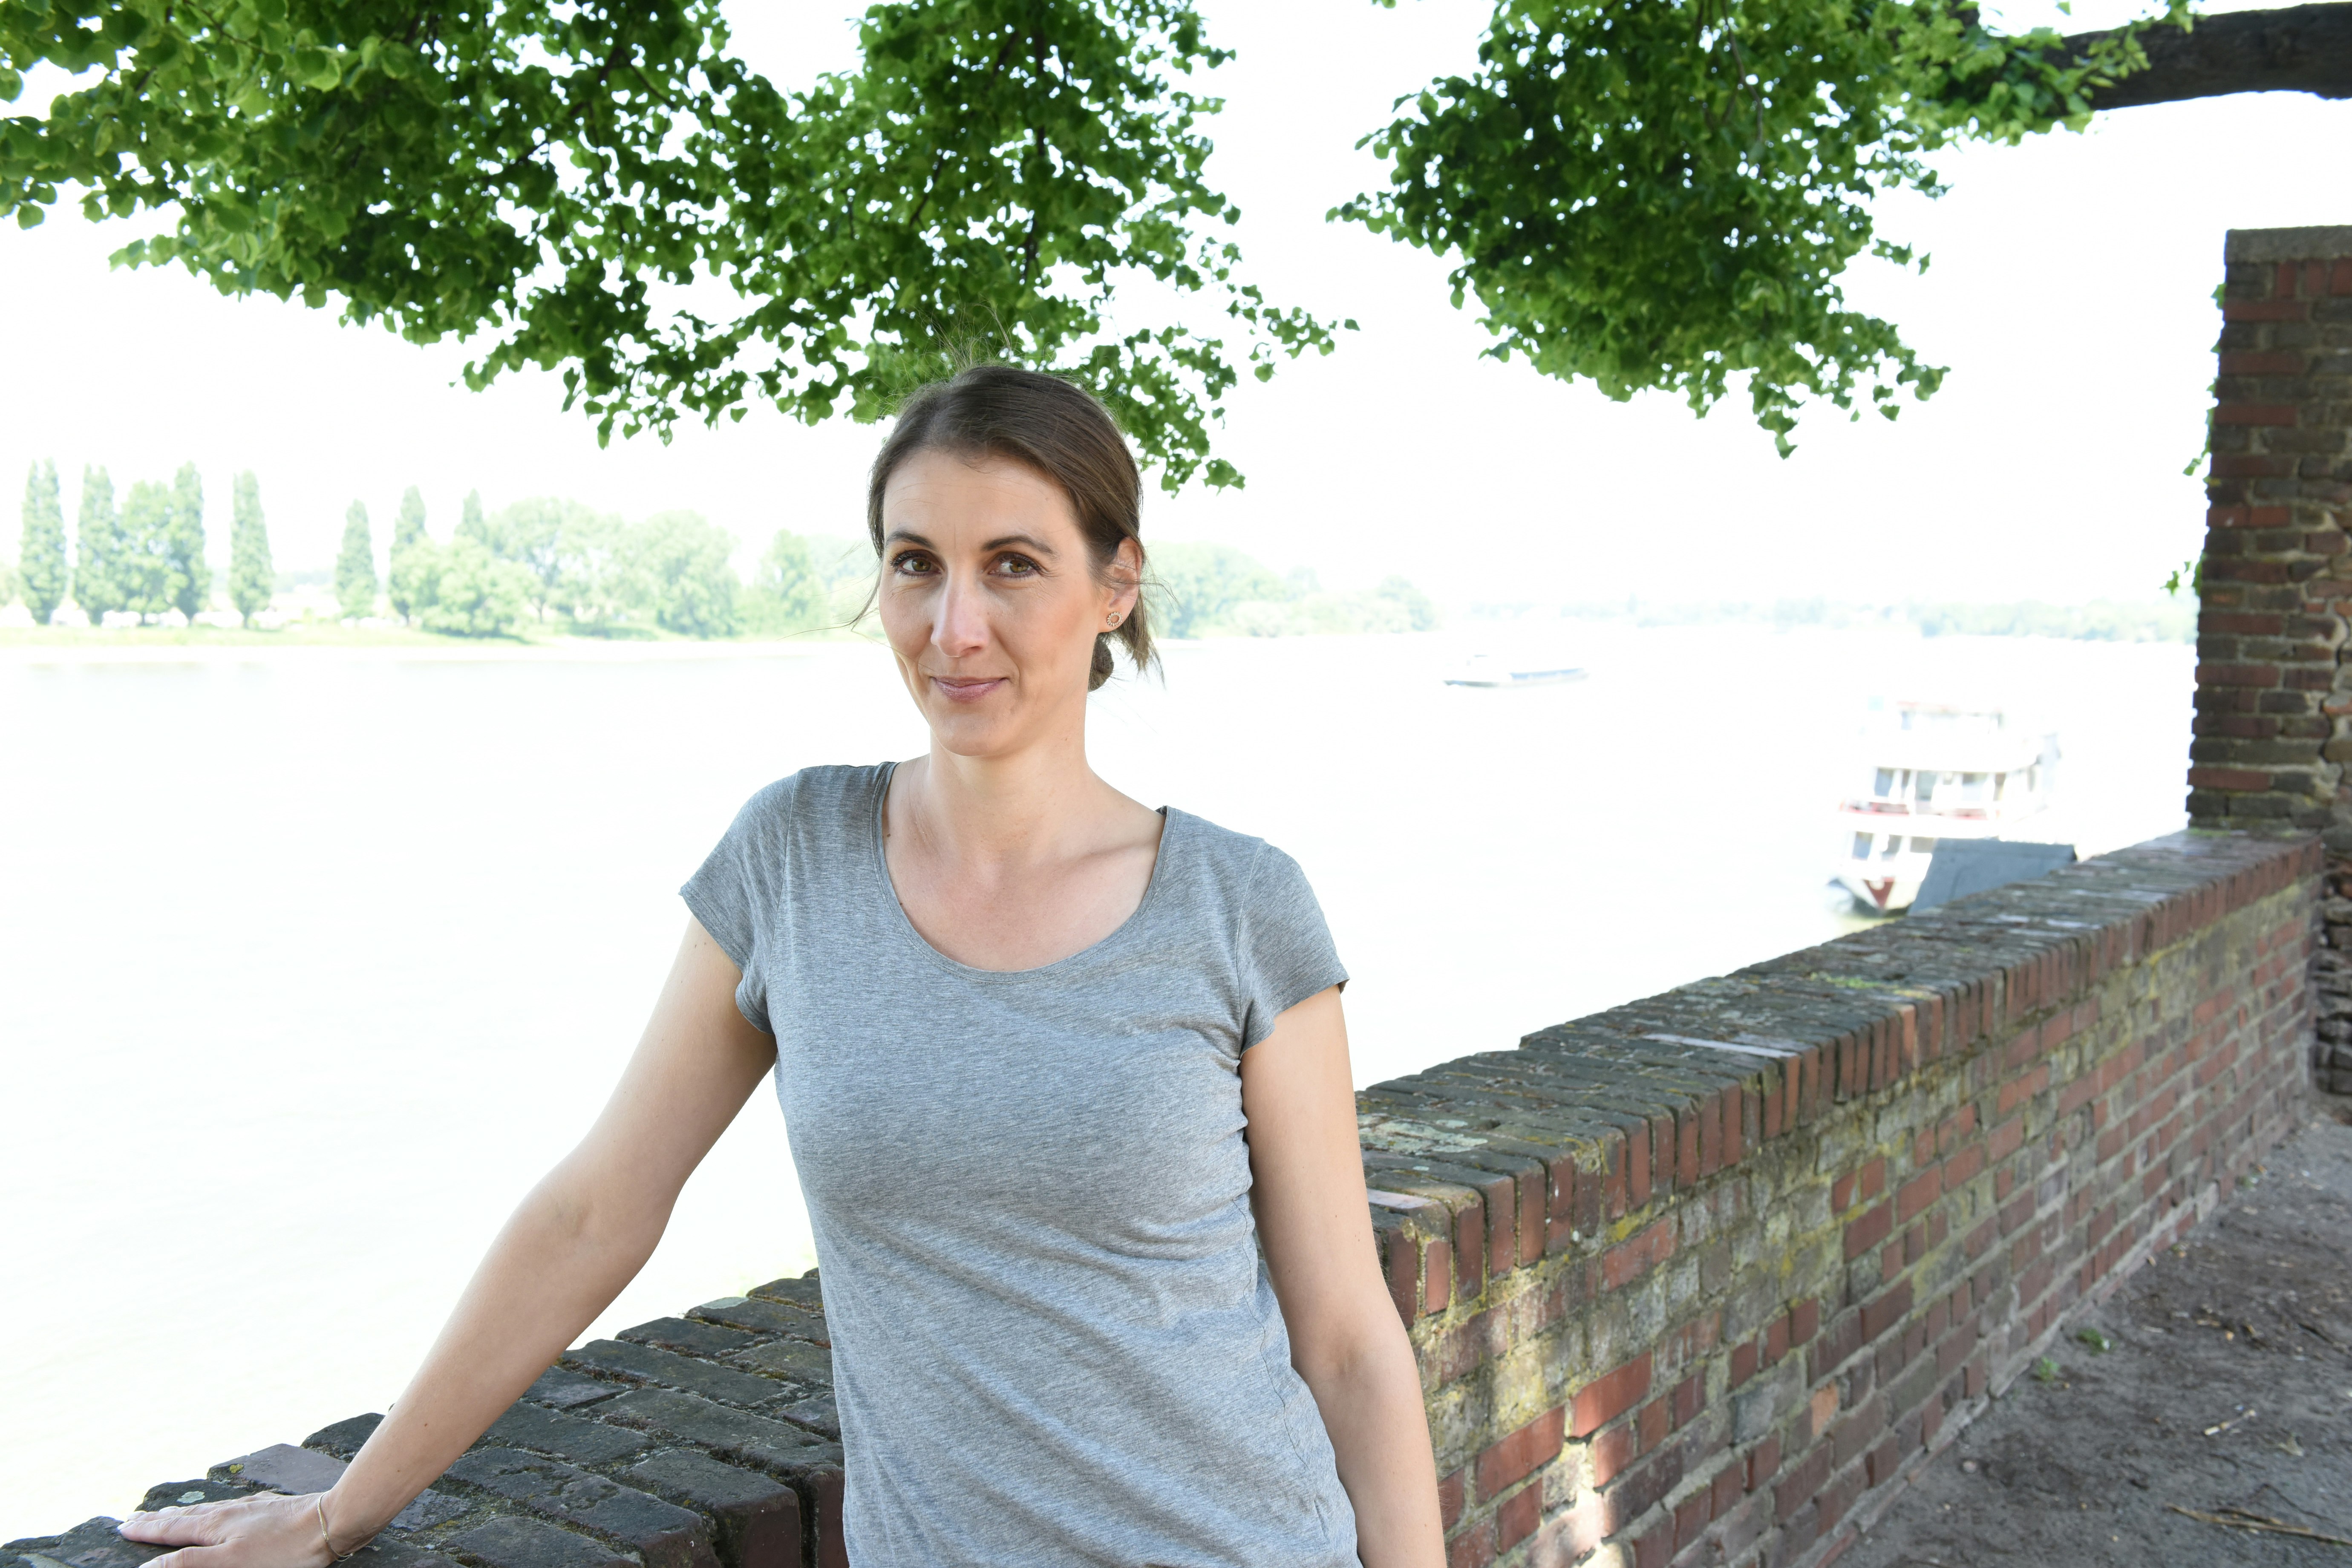 Katrin stands close to a brick wall wearing a grey t-shirt.